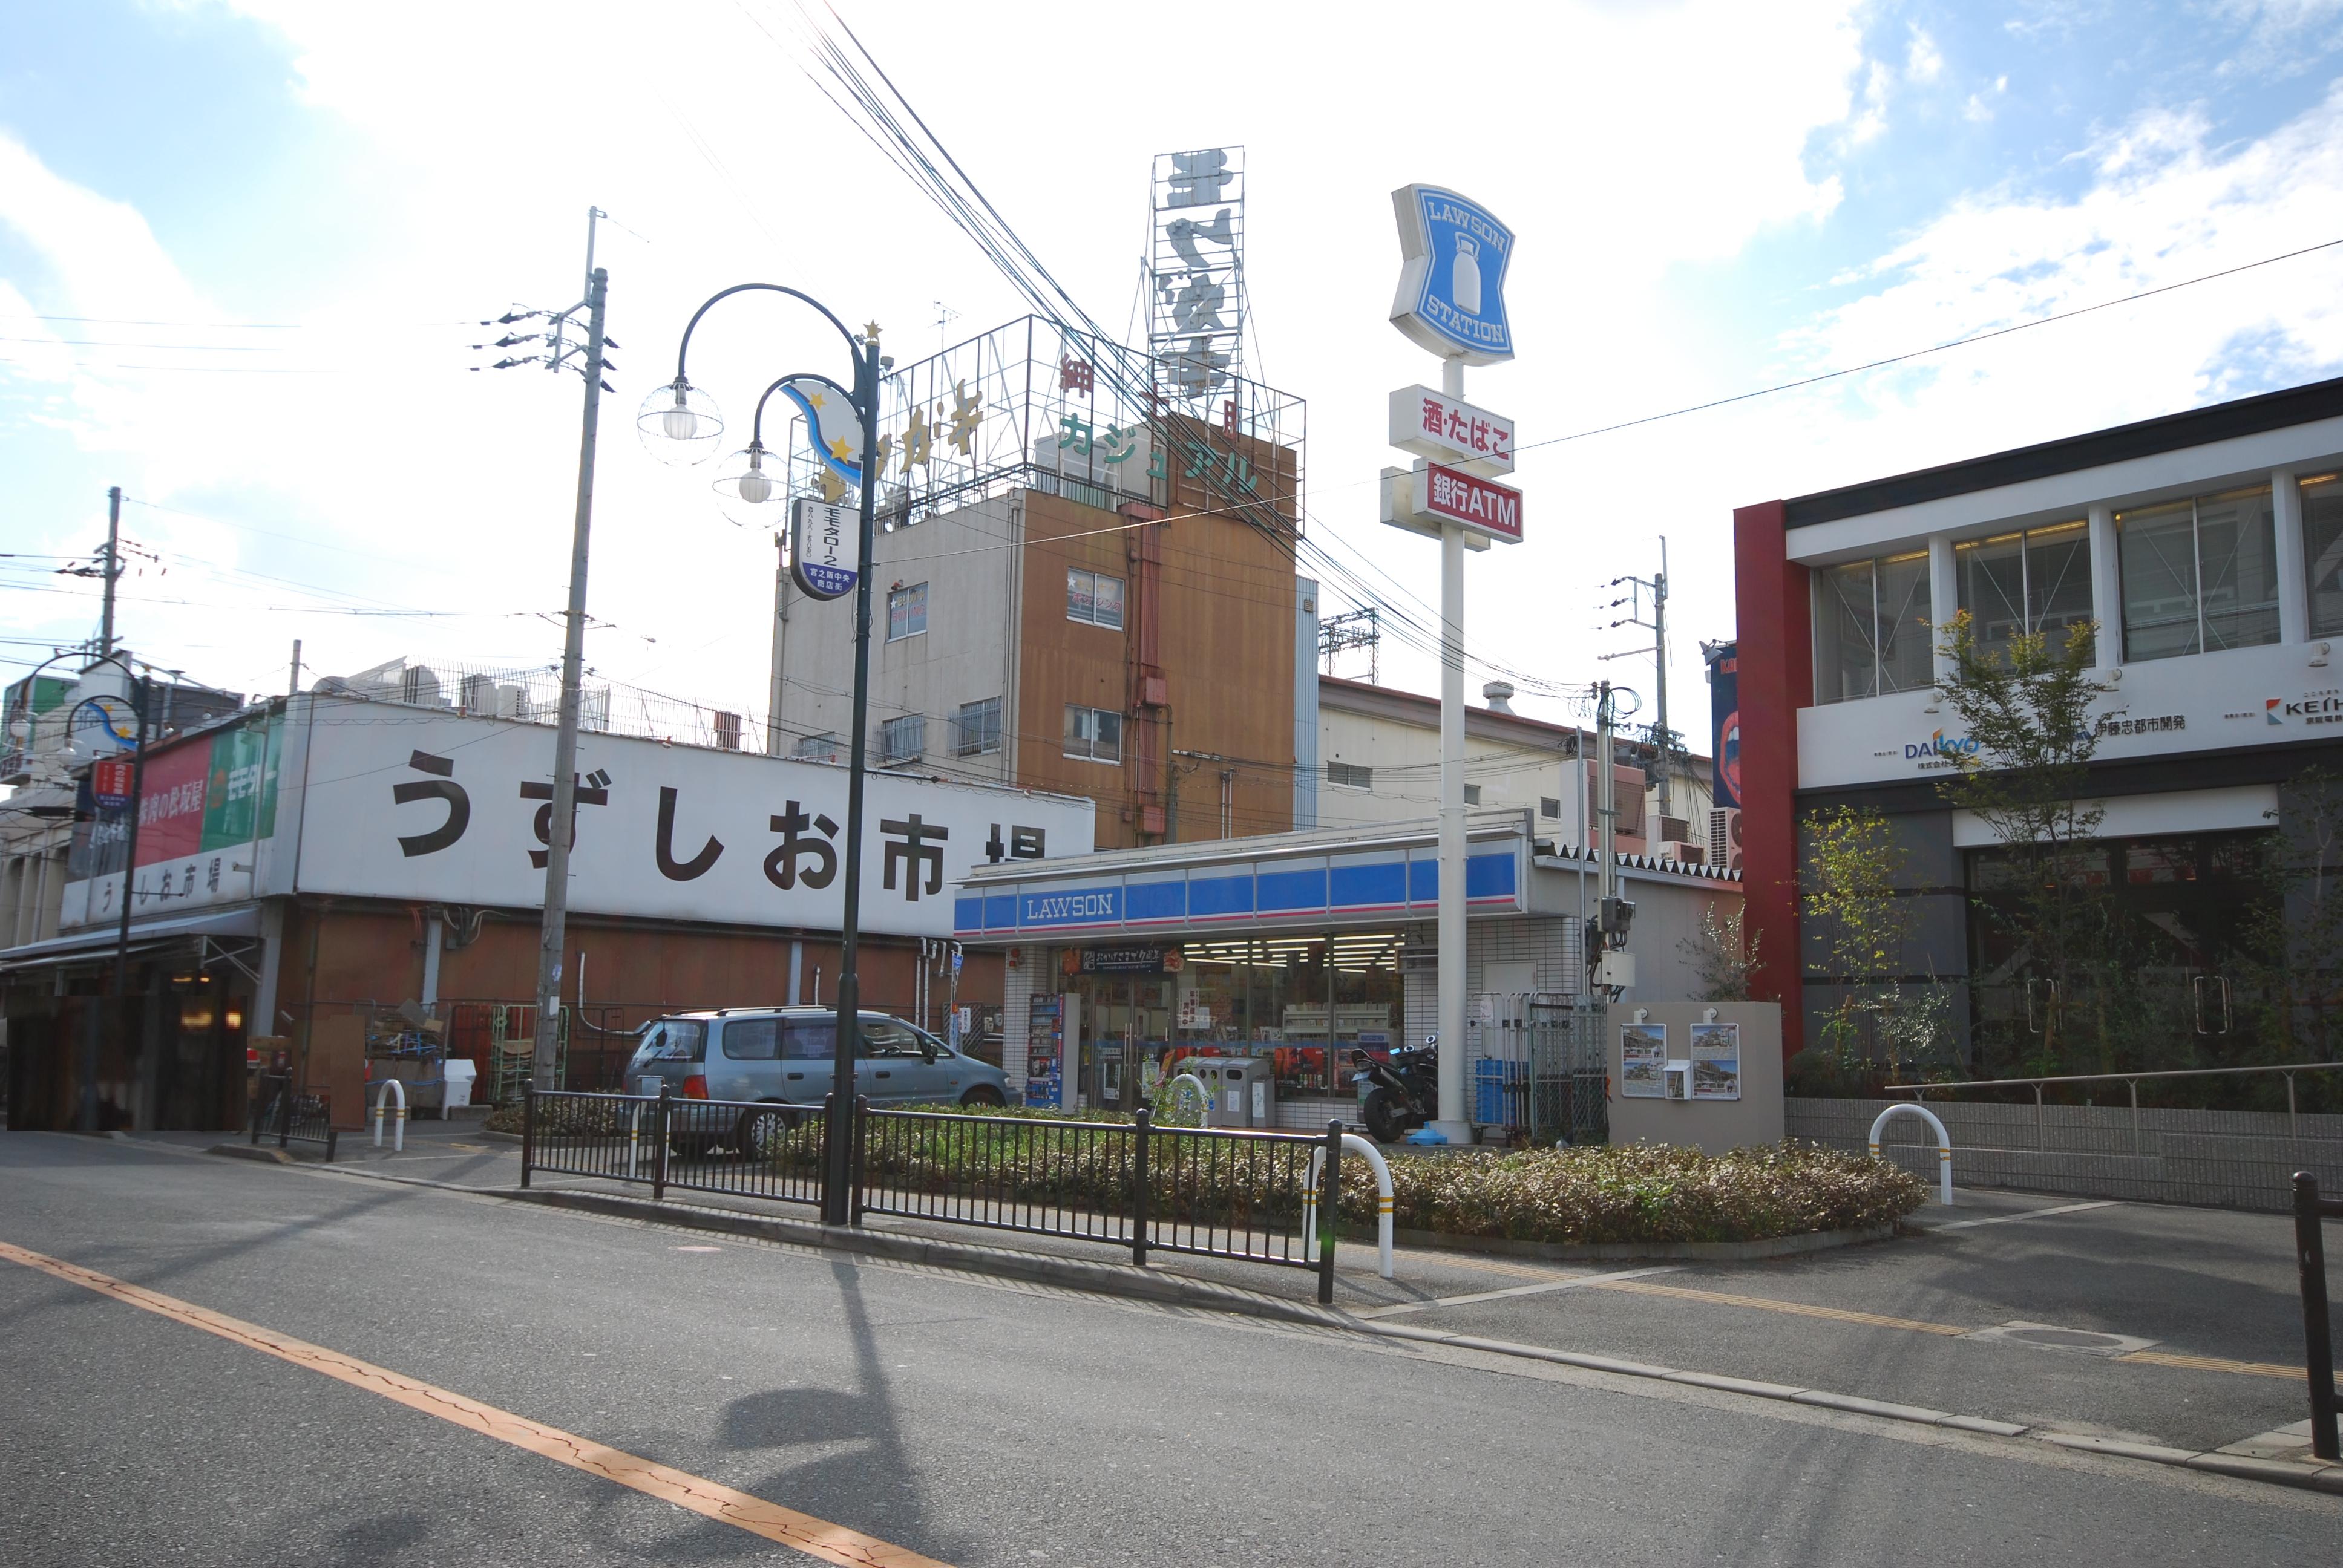 Convenience store. 753m until Lawson Hirakata Nishikin'ya store (convenience store)